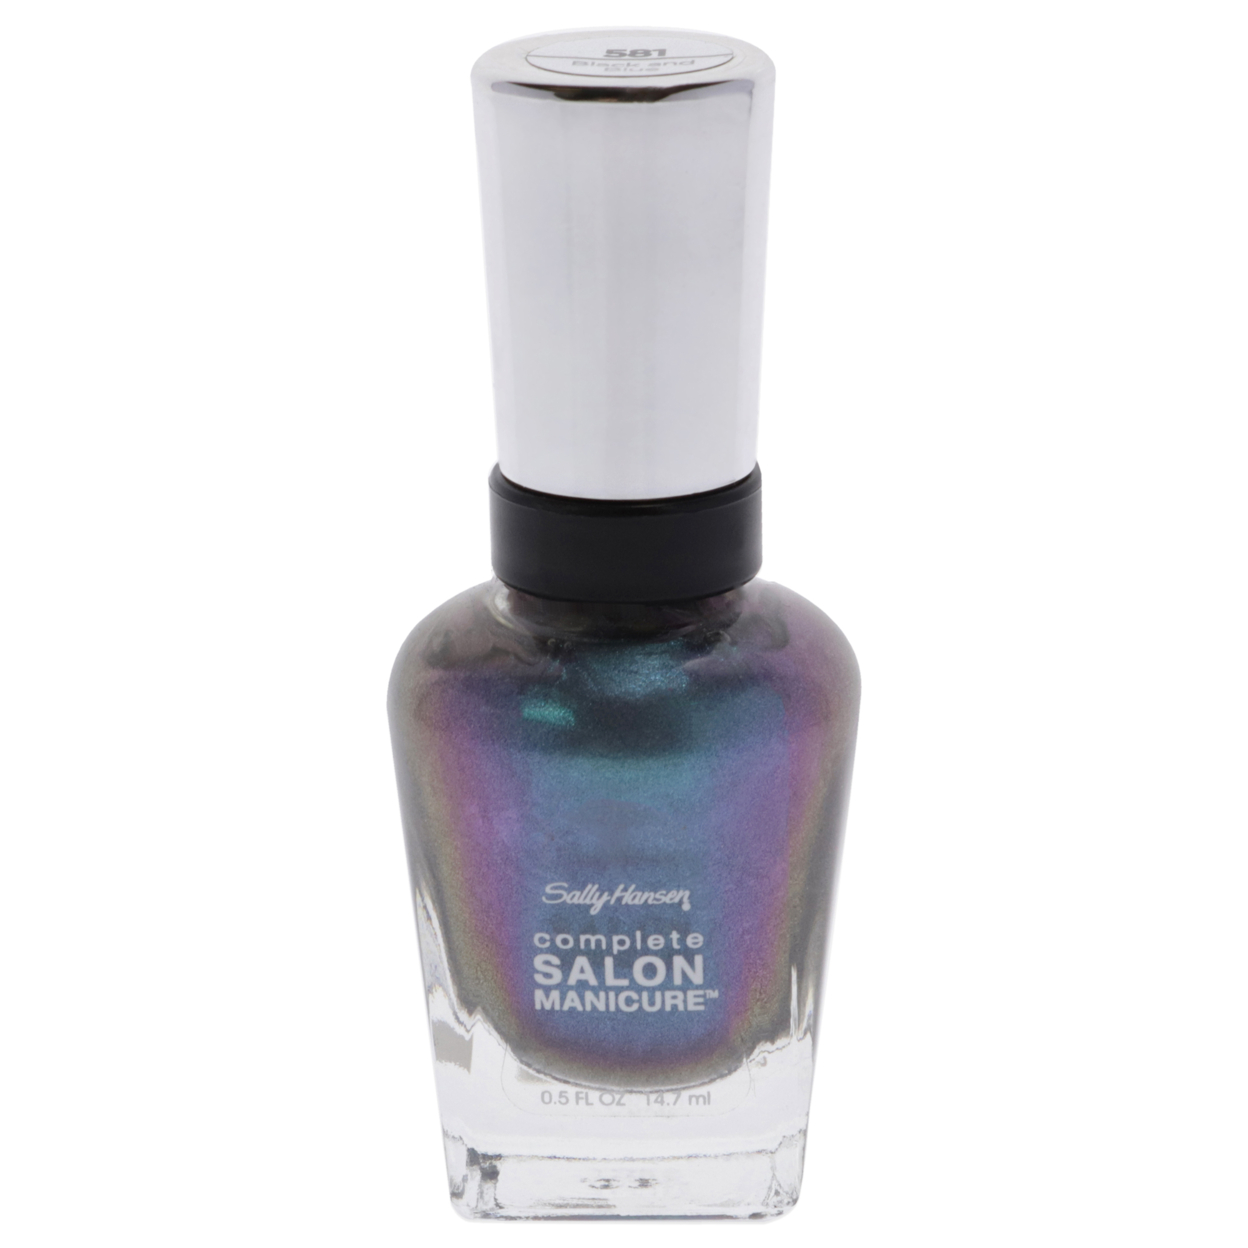 Sally Hansen Complete Salon Manicure - 581 Black and Blue 0.5 oz Nail Polish - image 1 of 4